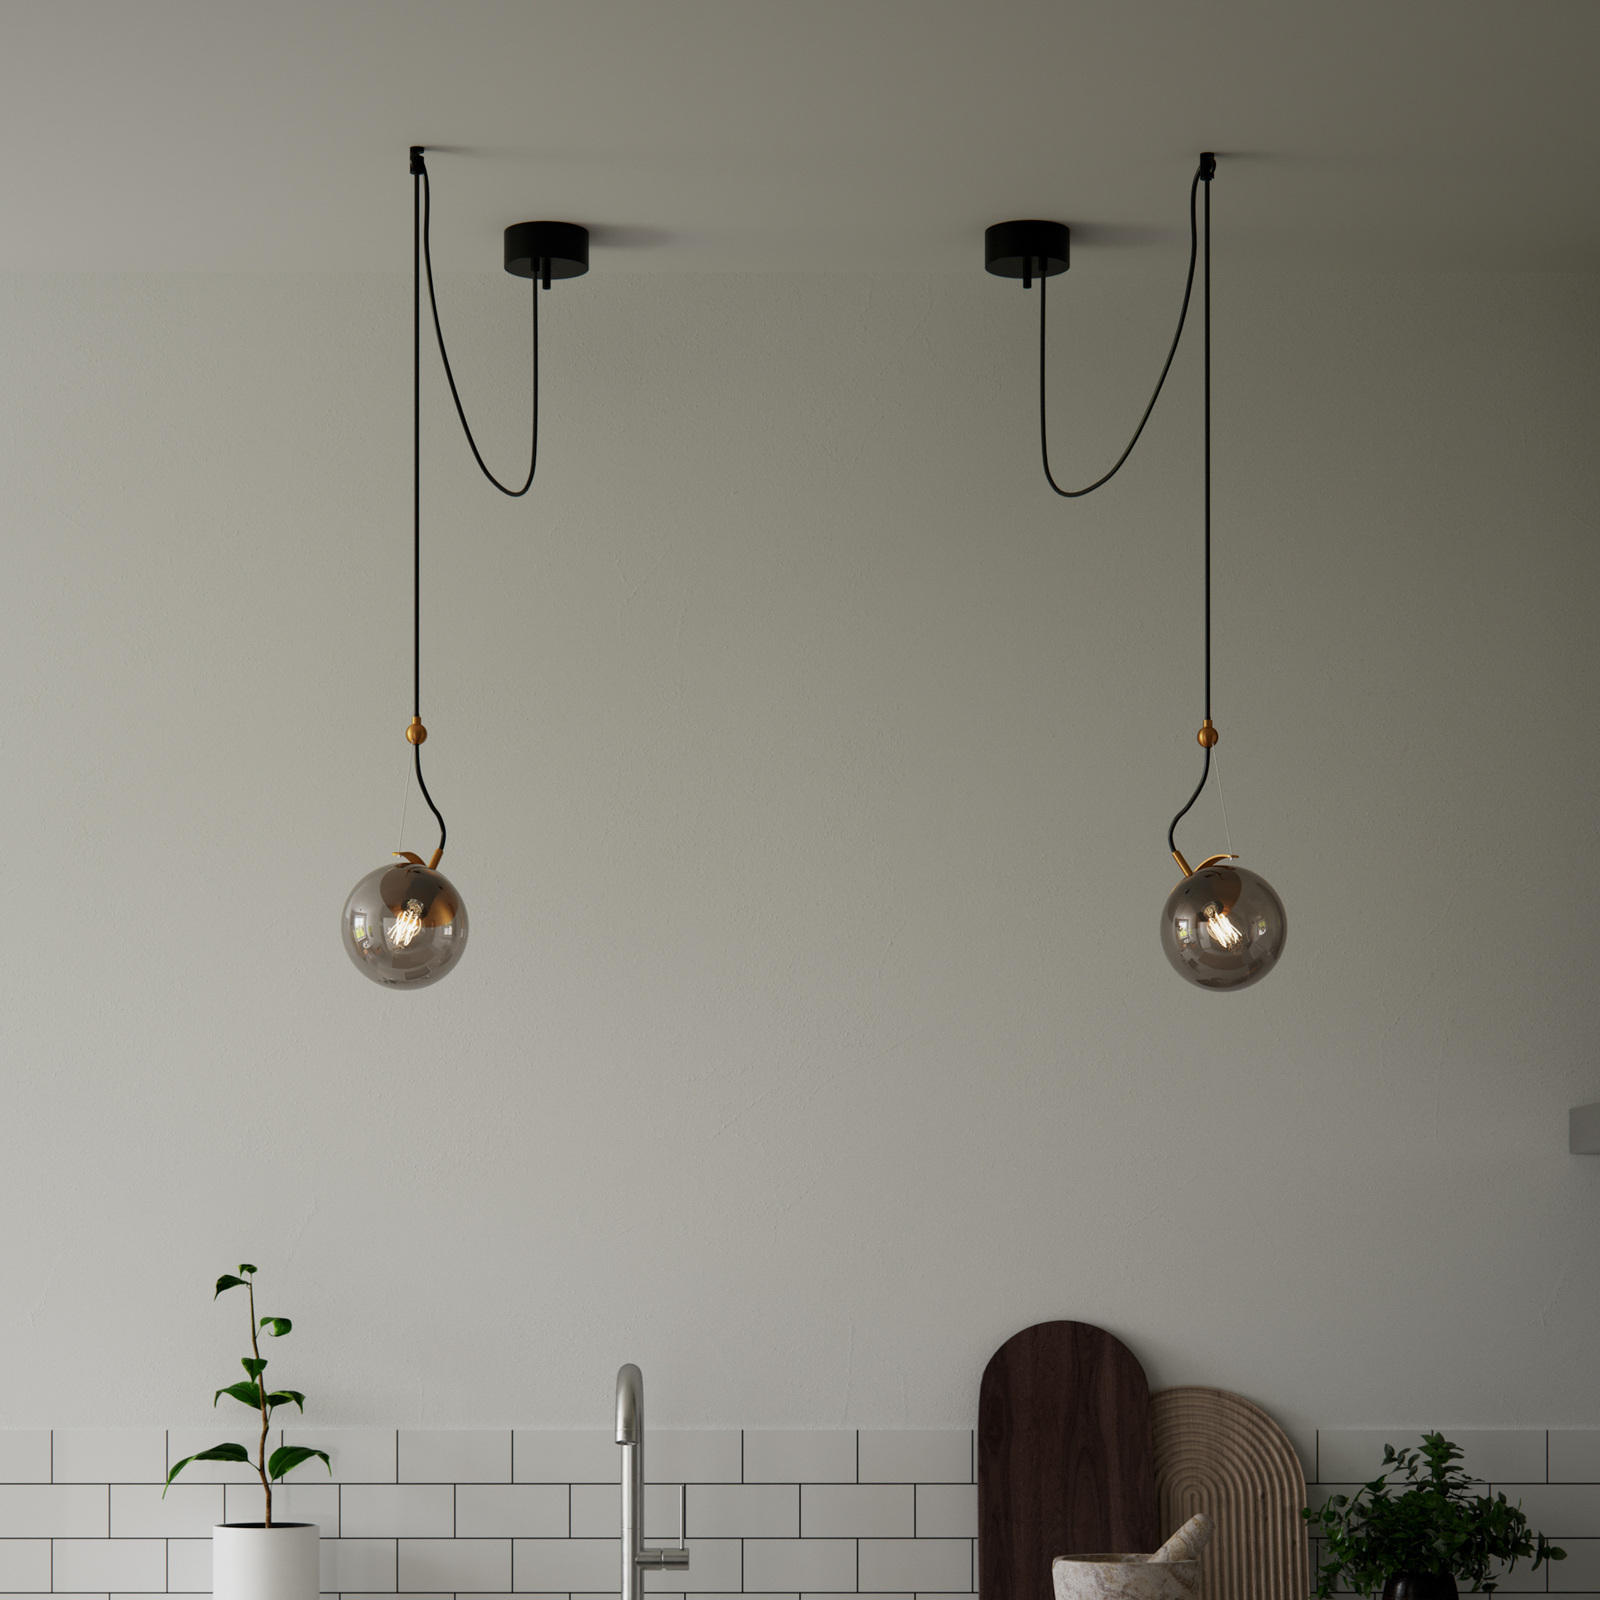 By Rydéns Carry hanging light decentralised 1-bulb